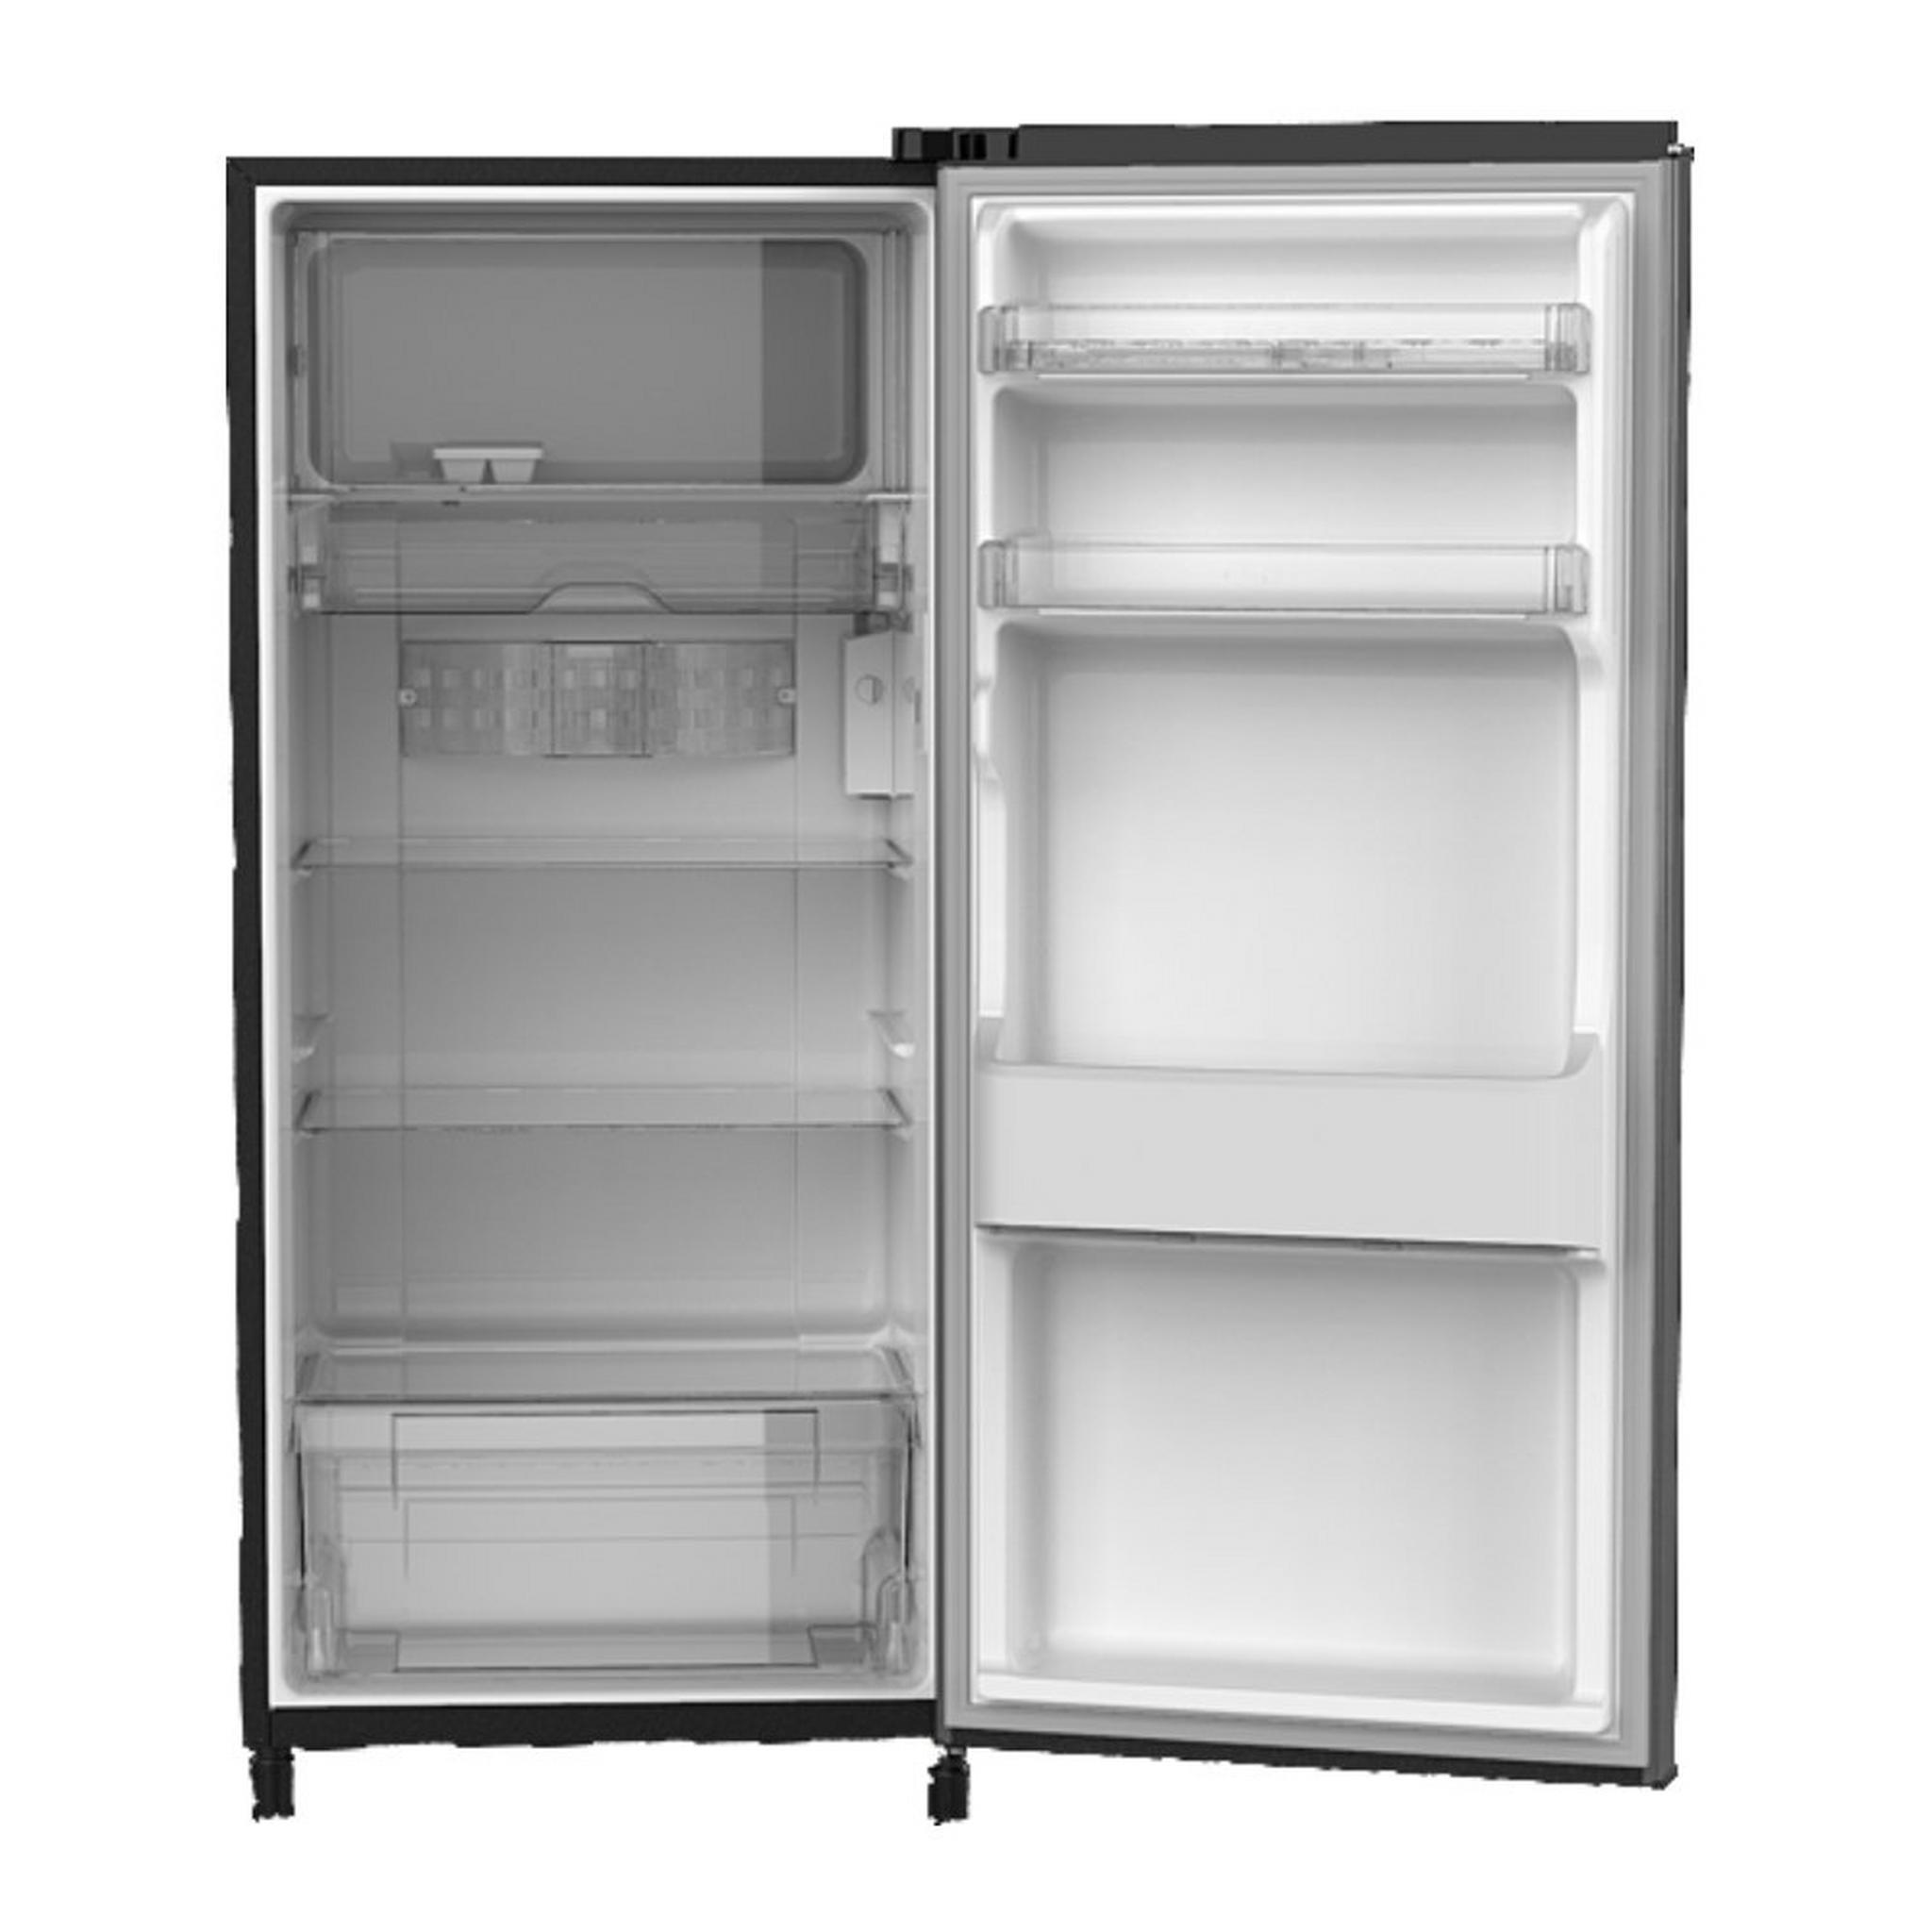 Panasonic 6 CFT Single Door Refrigerator (NR-AF176SSAE) - Silver